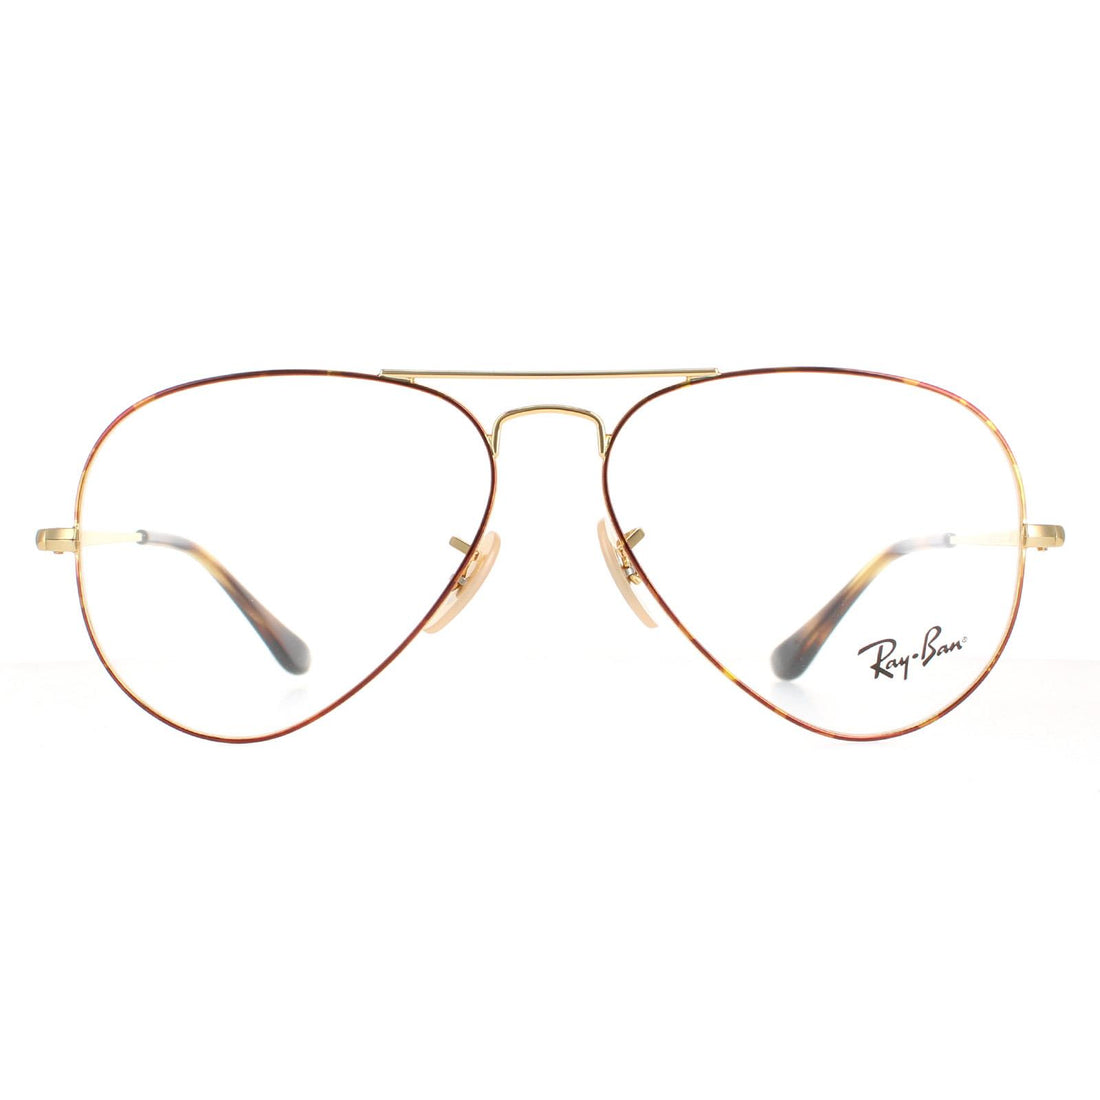 Ray-Ban 6489 Aviator Glasses Frames Gold Top on Havana 55